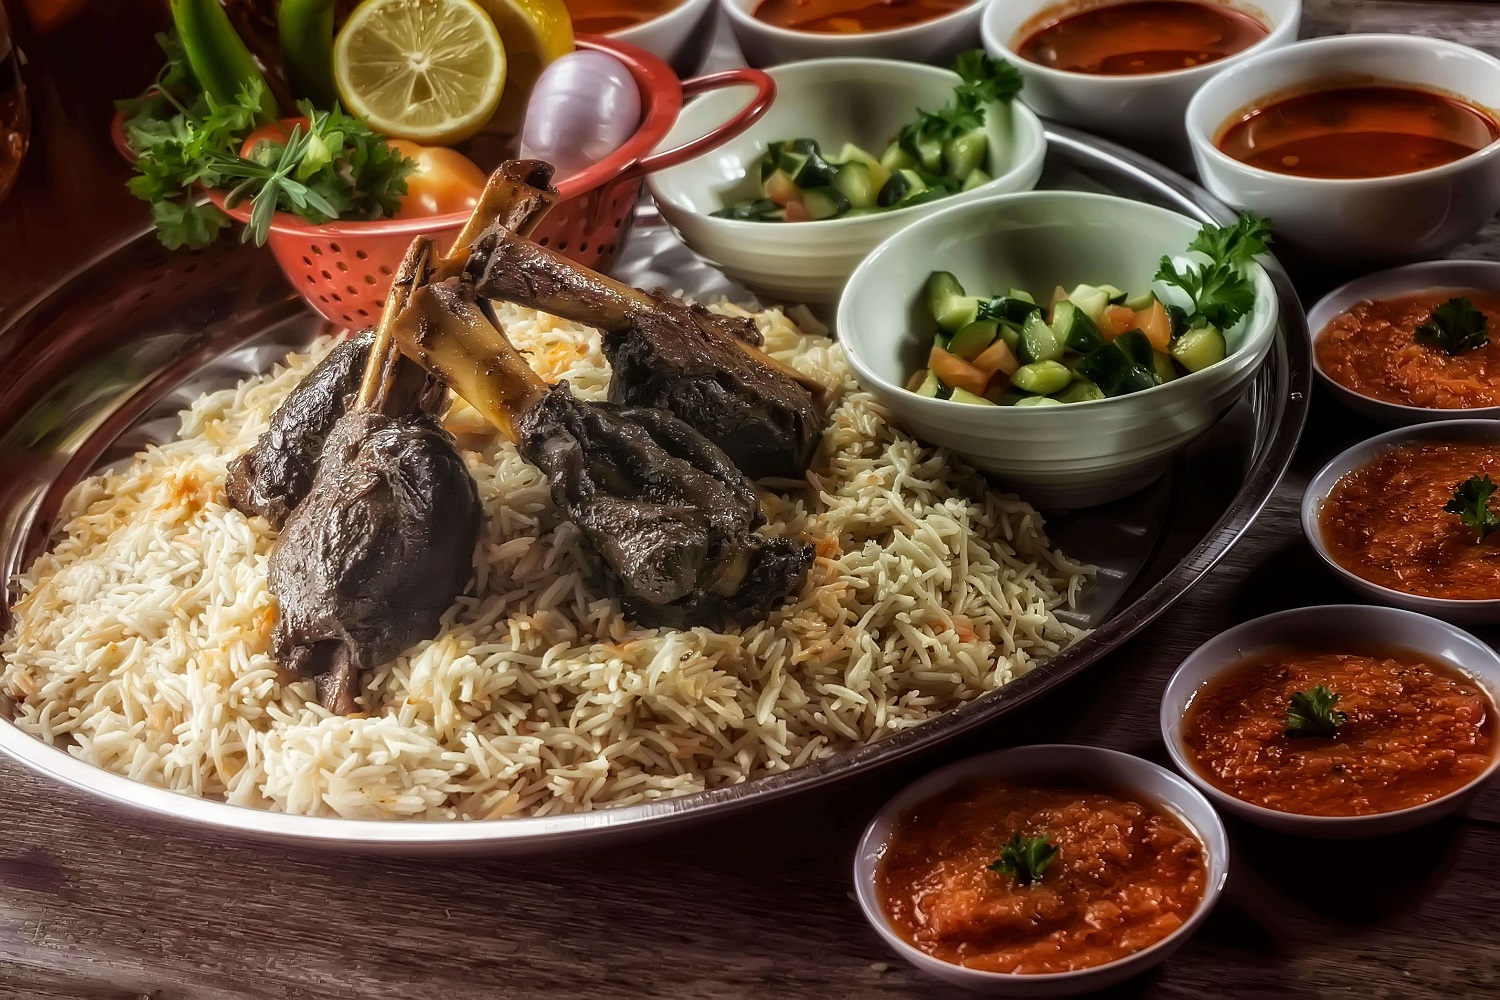 A popular meal in Dubai